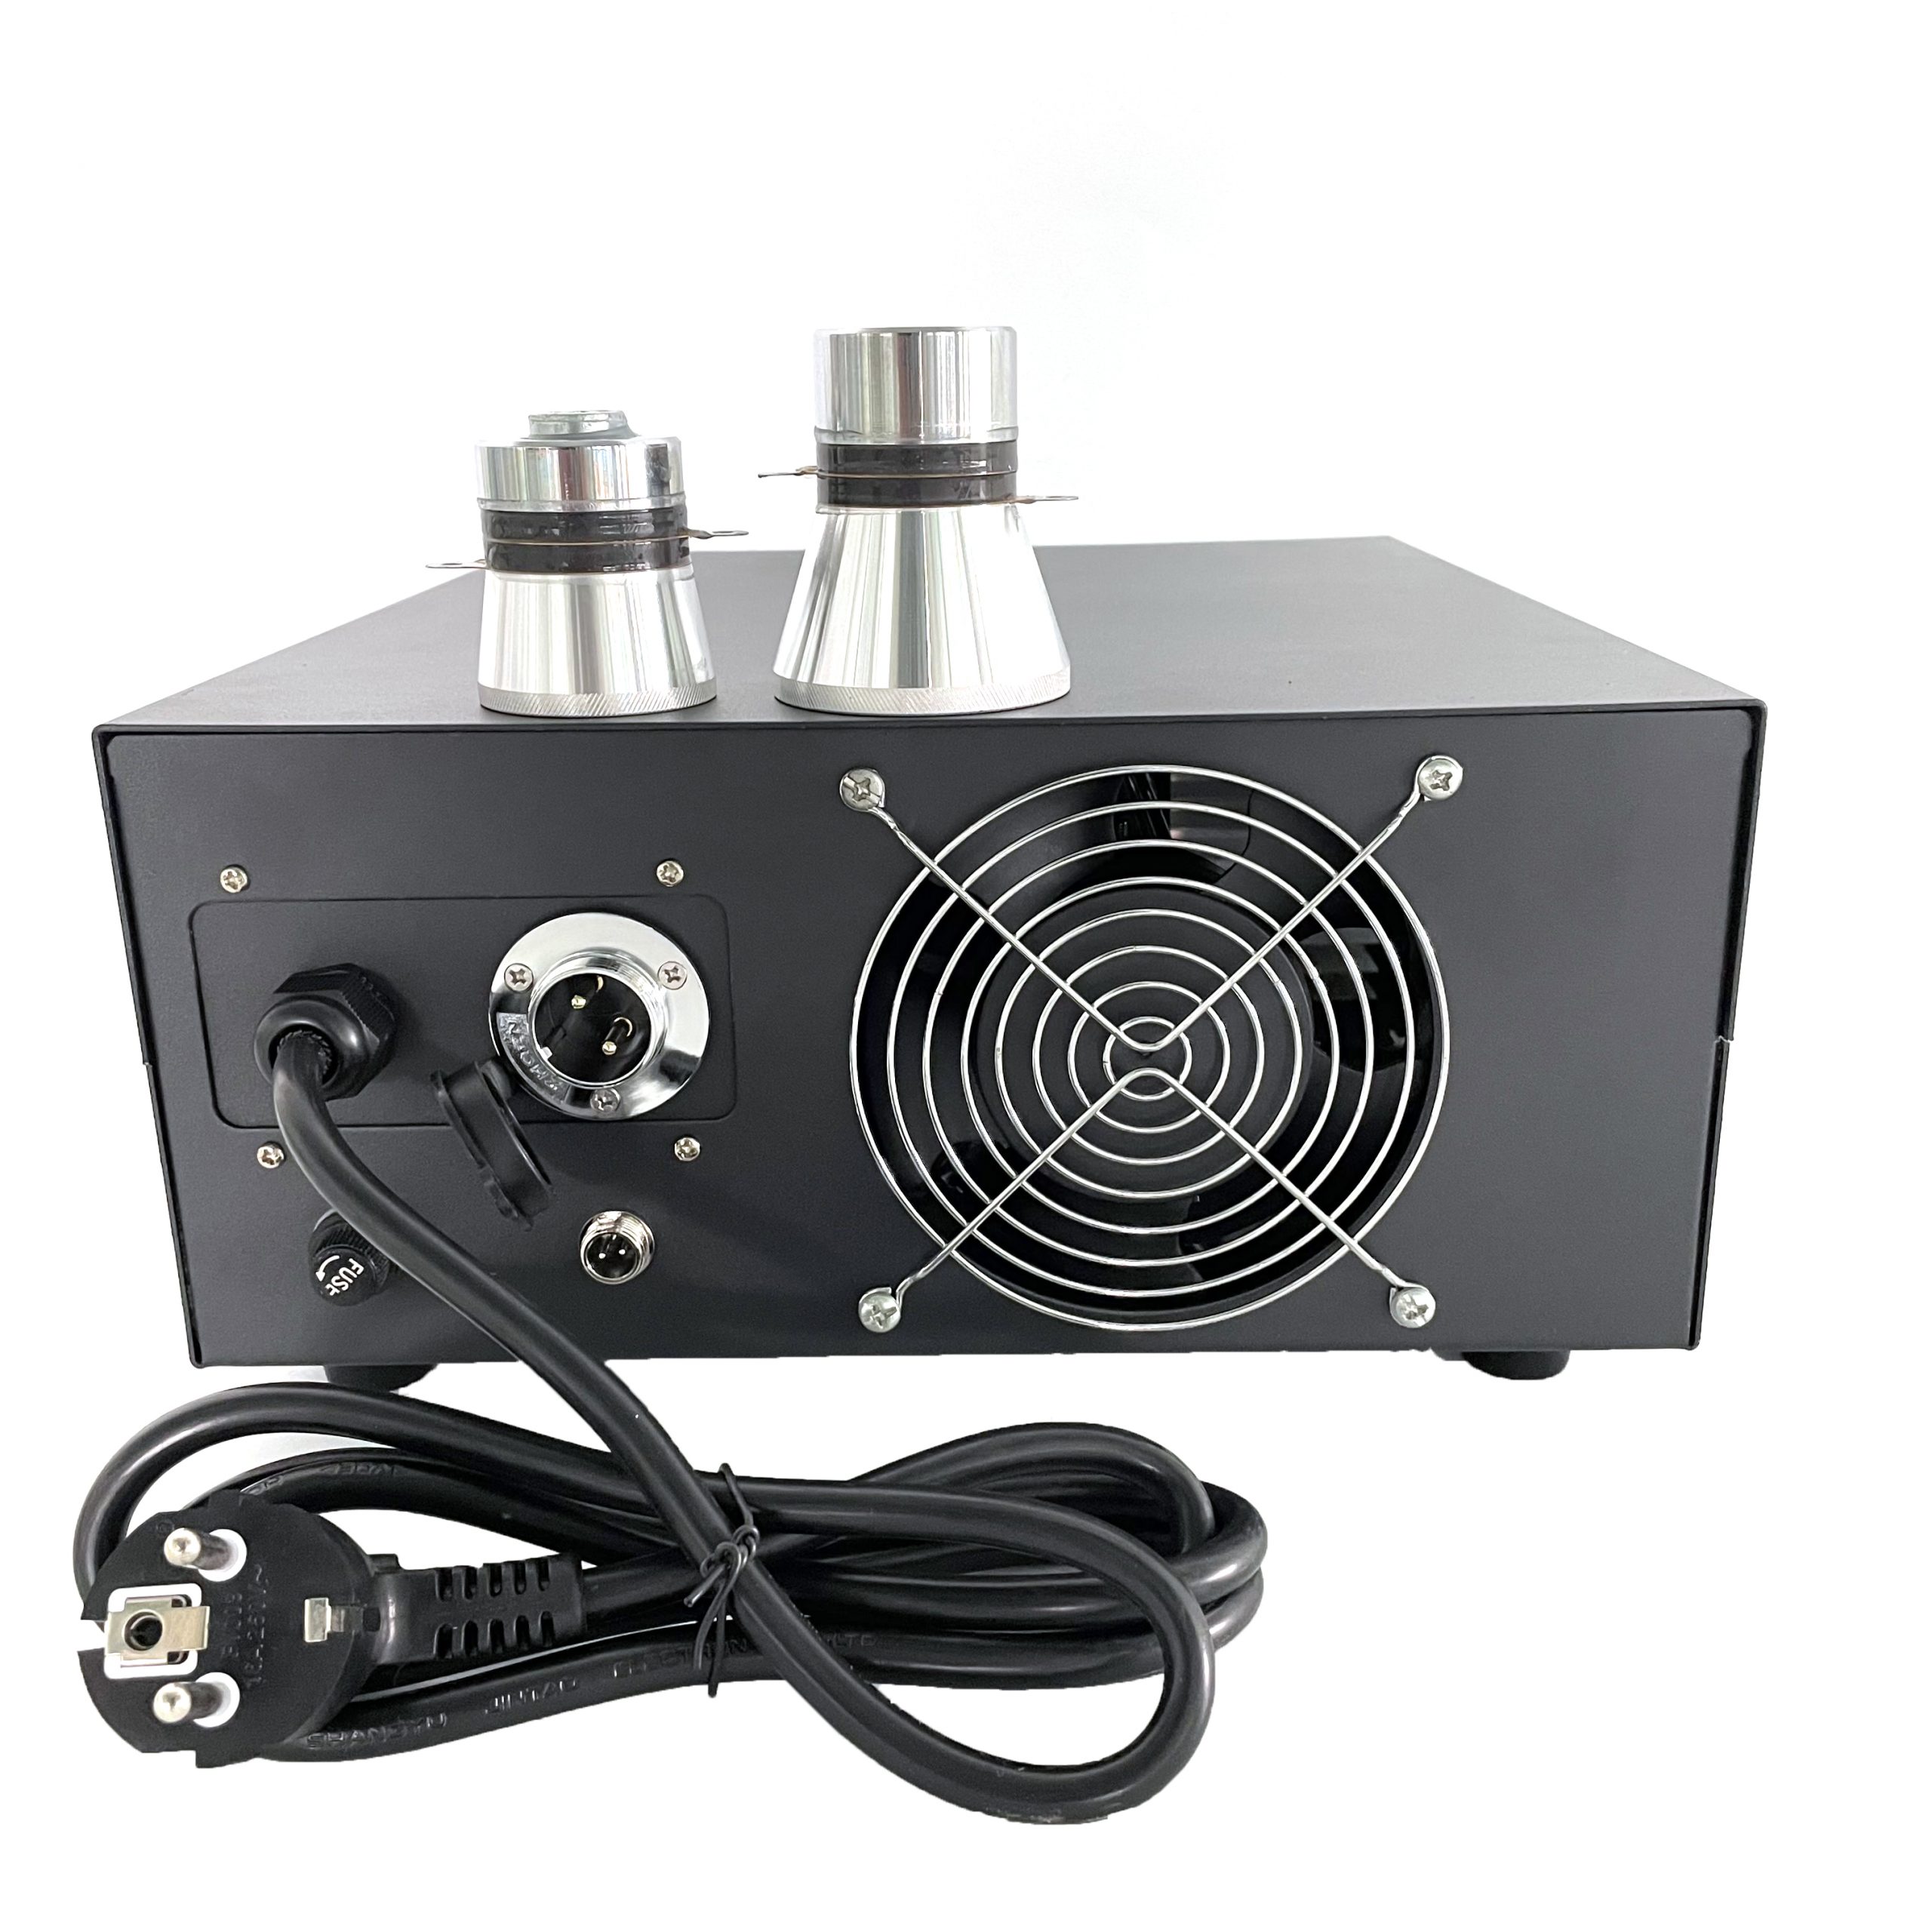 202212192039211 scaled - 25KHZ-135KHZ 1200W Ultrasonic Waves Multifrequency Ultrasonic Generator Power Supply Generator Box